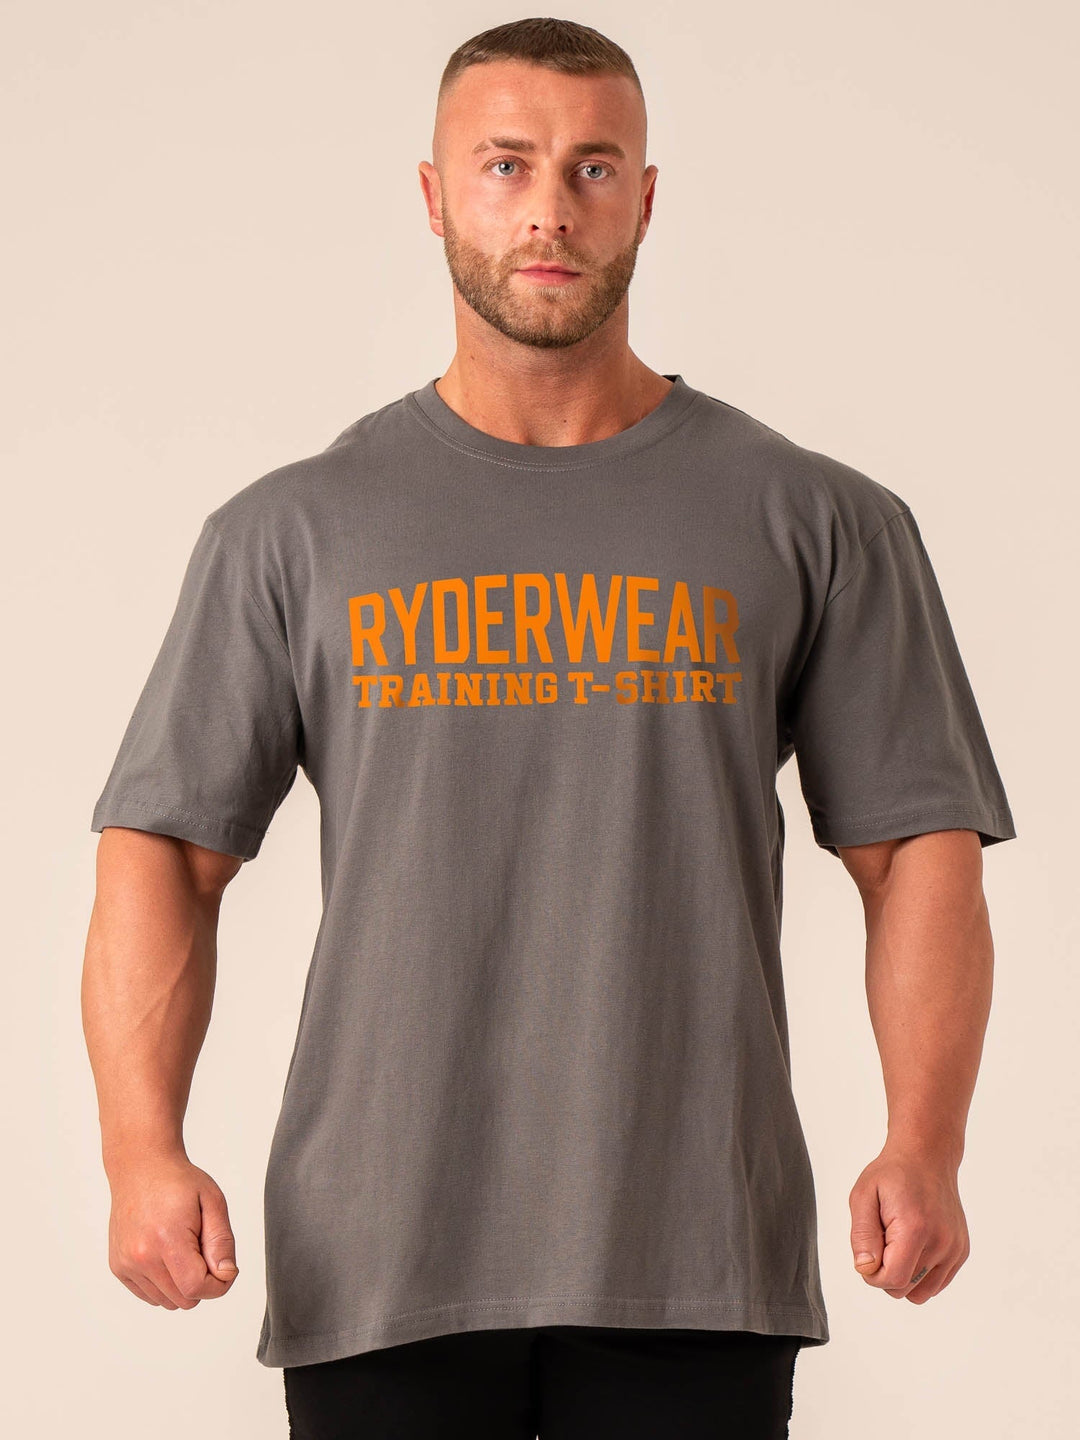 Ryderwear Training T-Shirt - Charcoal Clothing Ryderwear 